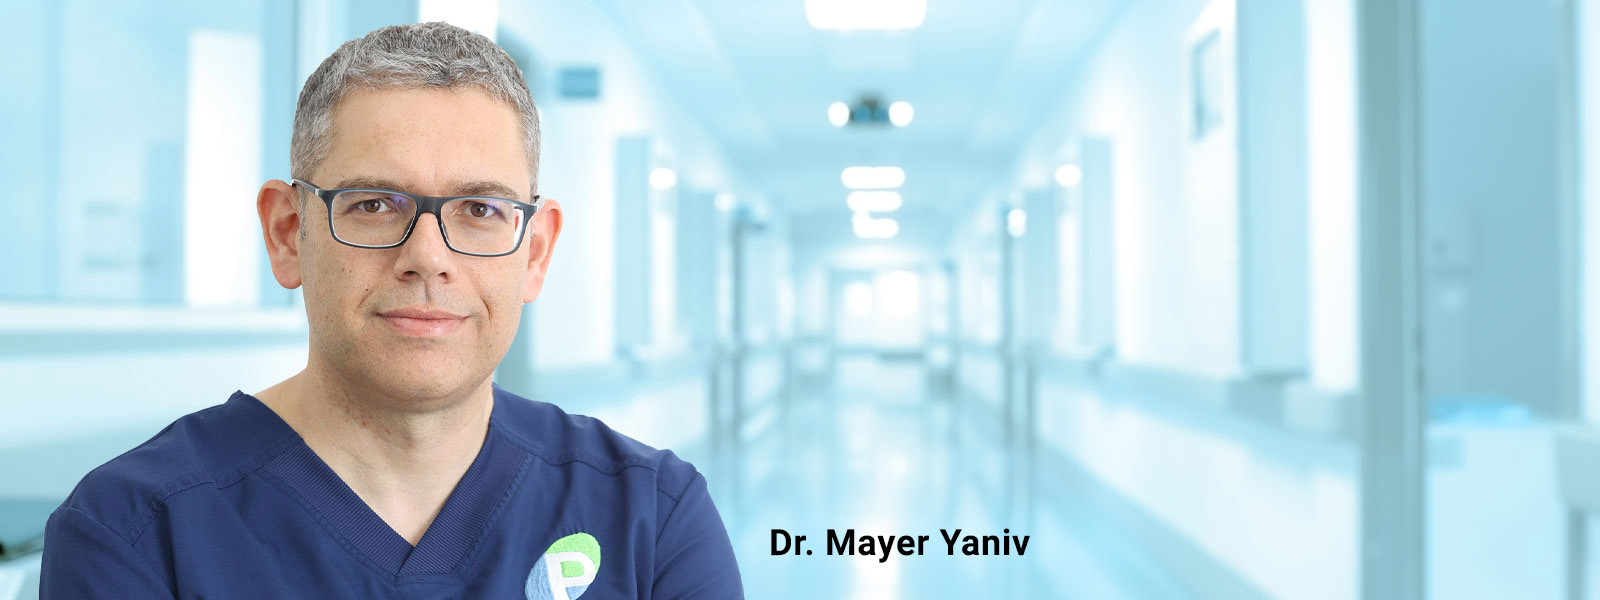 Dr. Mayer Yaniv